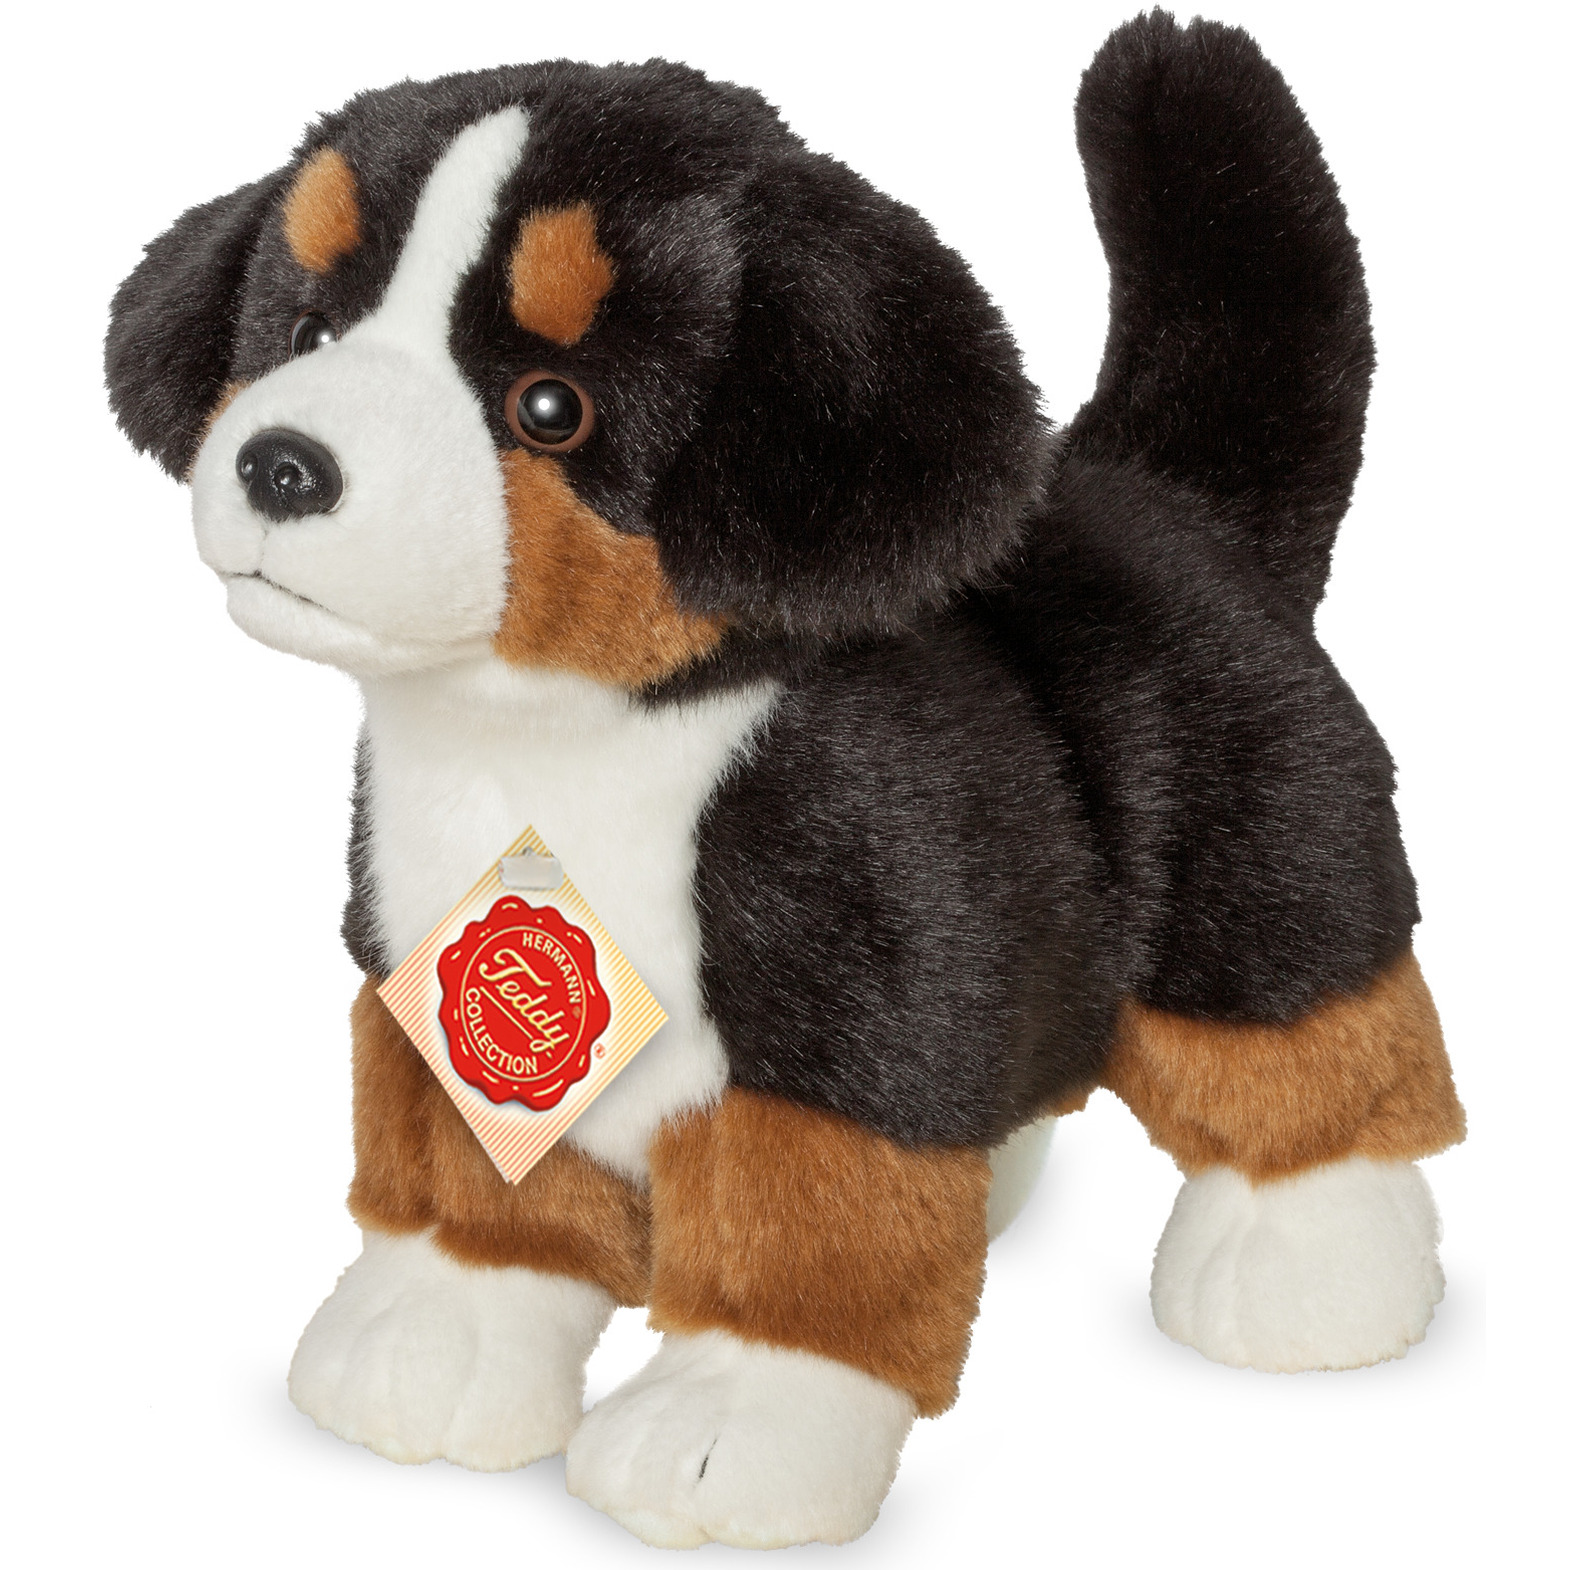 Knuffeldier hond Berner Sennen zachte pluche stof premium knuffels multi kleuren 23 cm